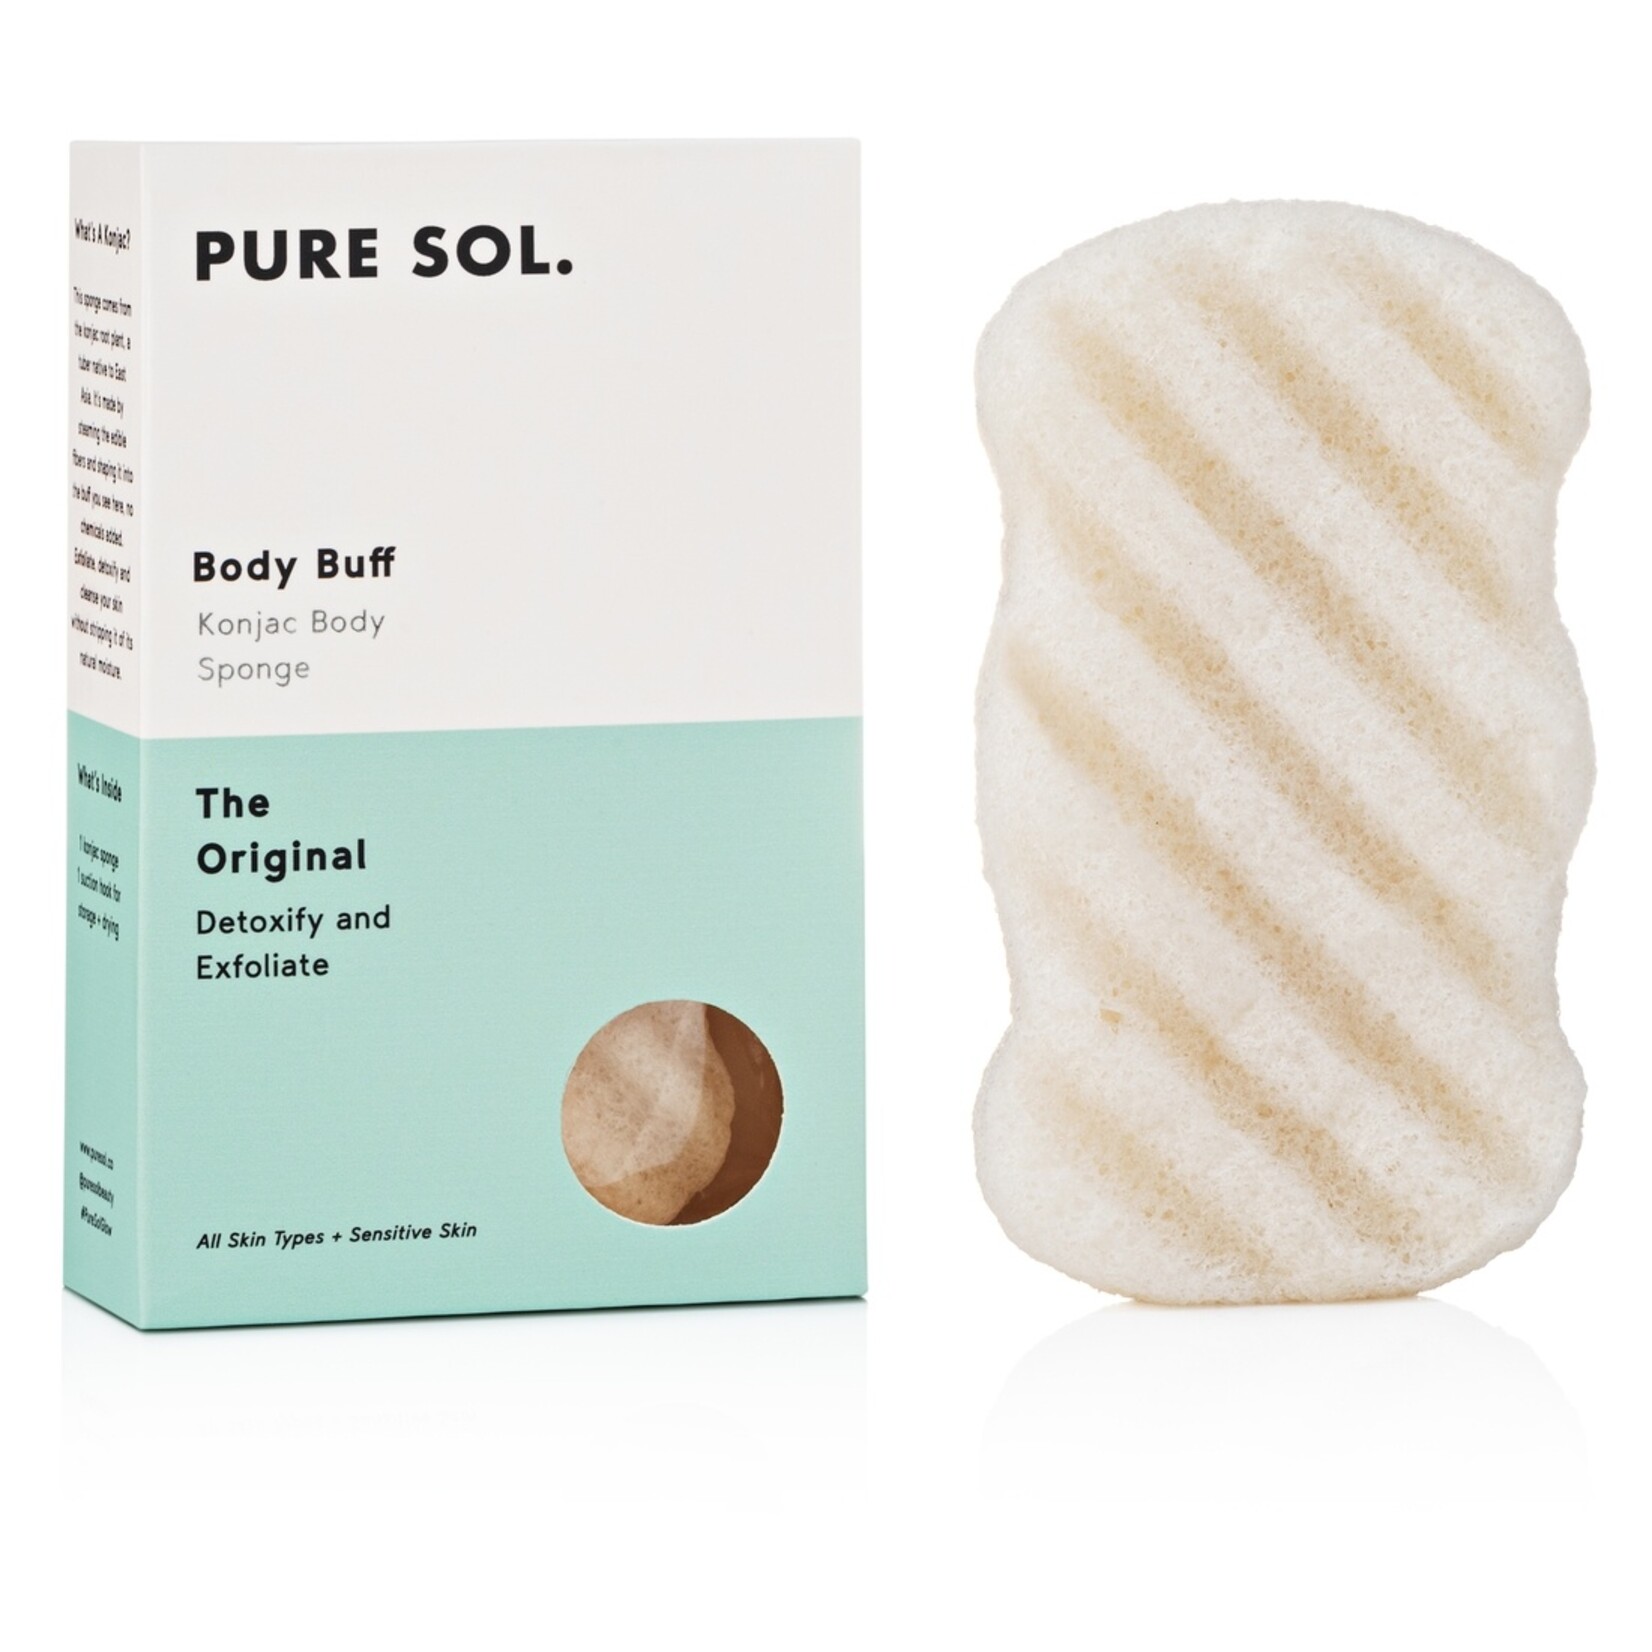 PURE SOL. Original Body Konjac Sponge